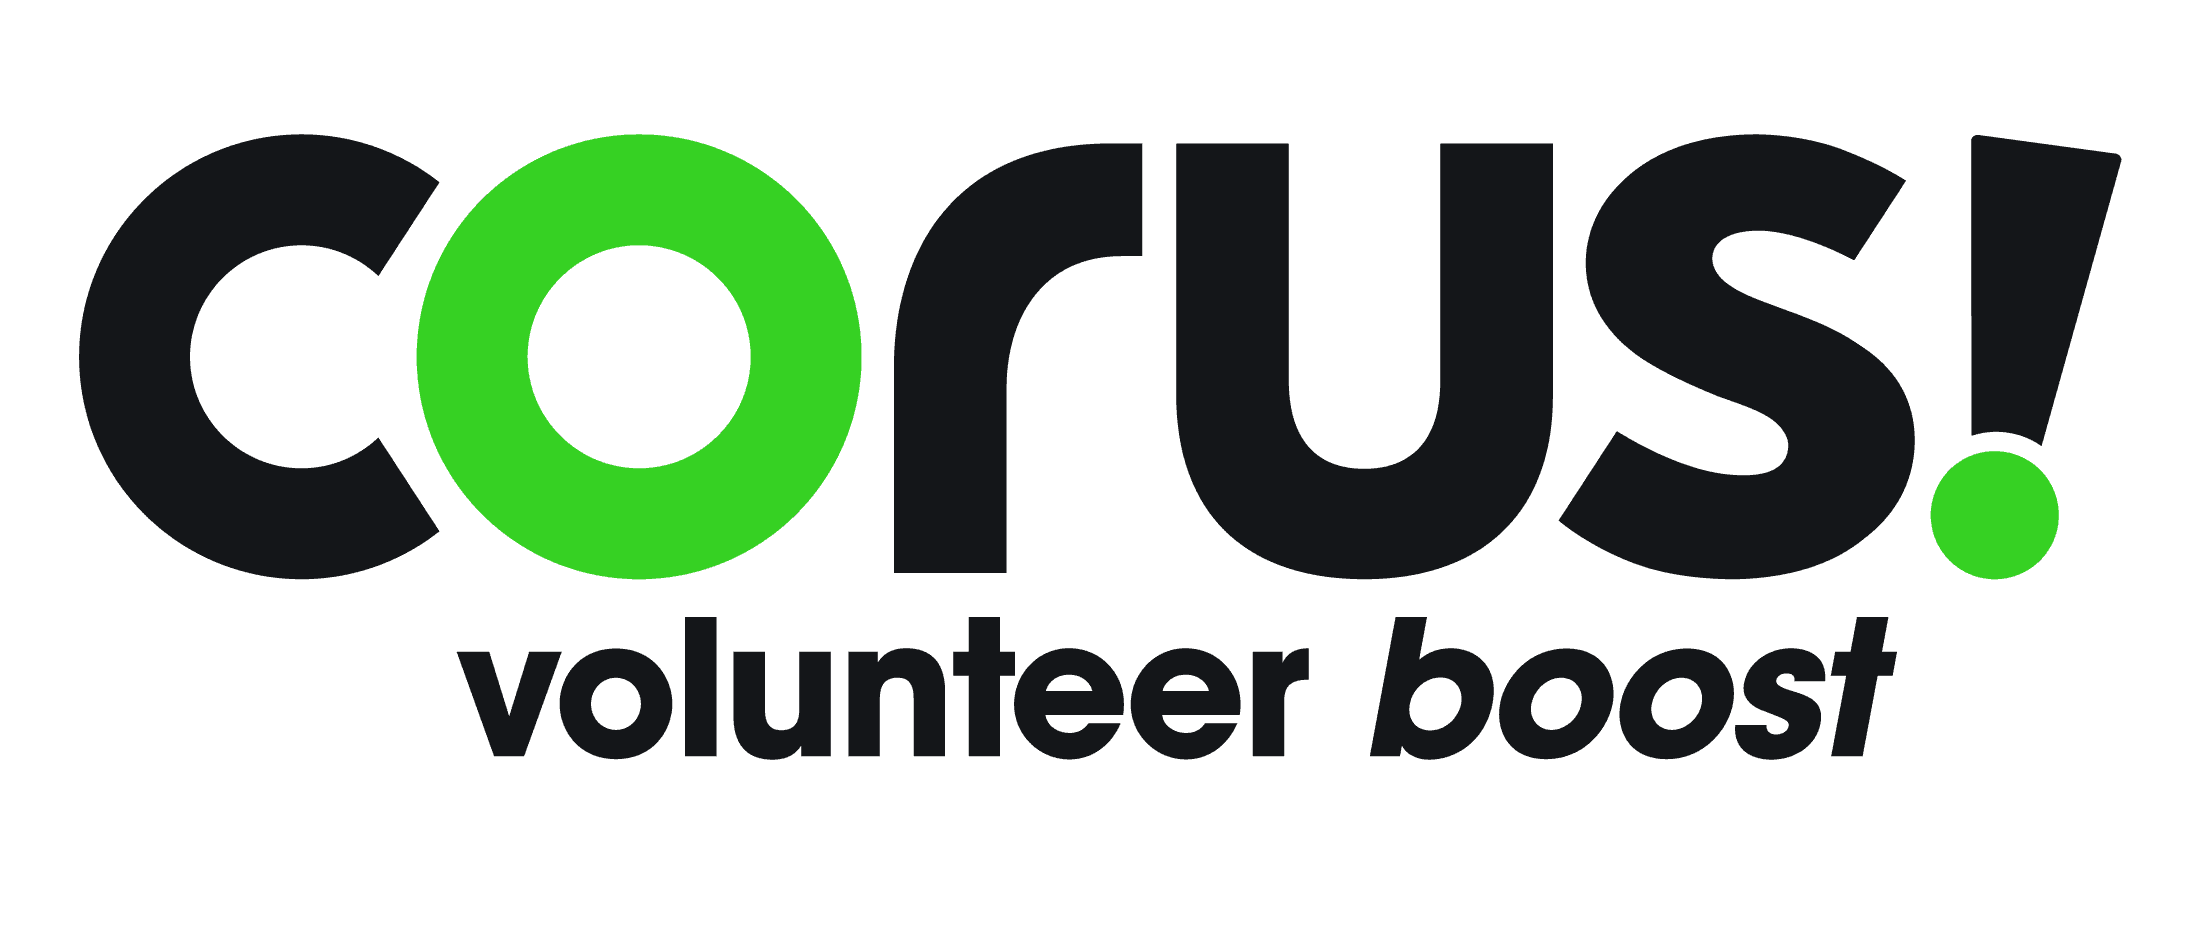 Corus volunteer boost logo